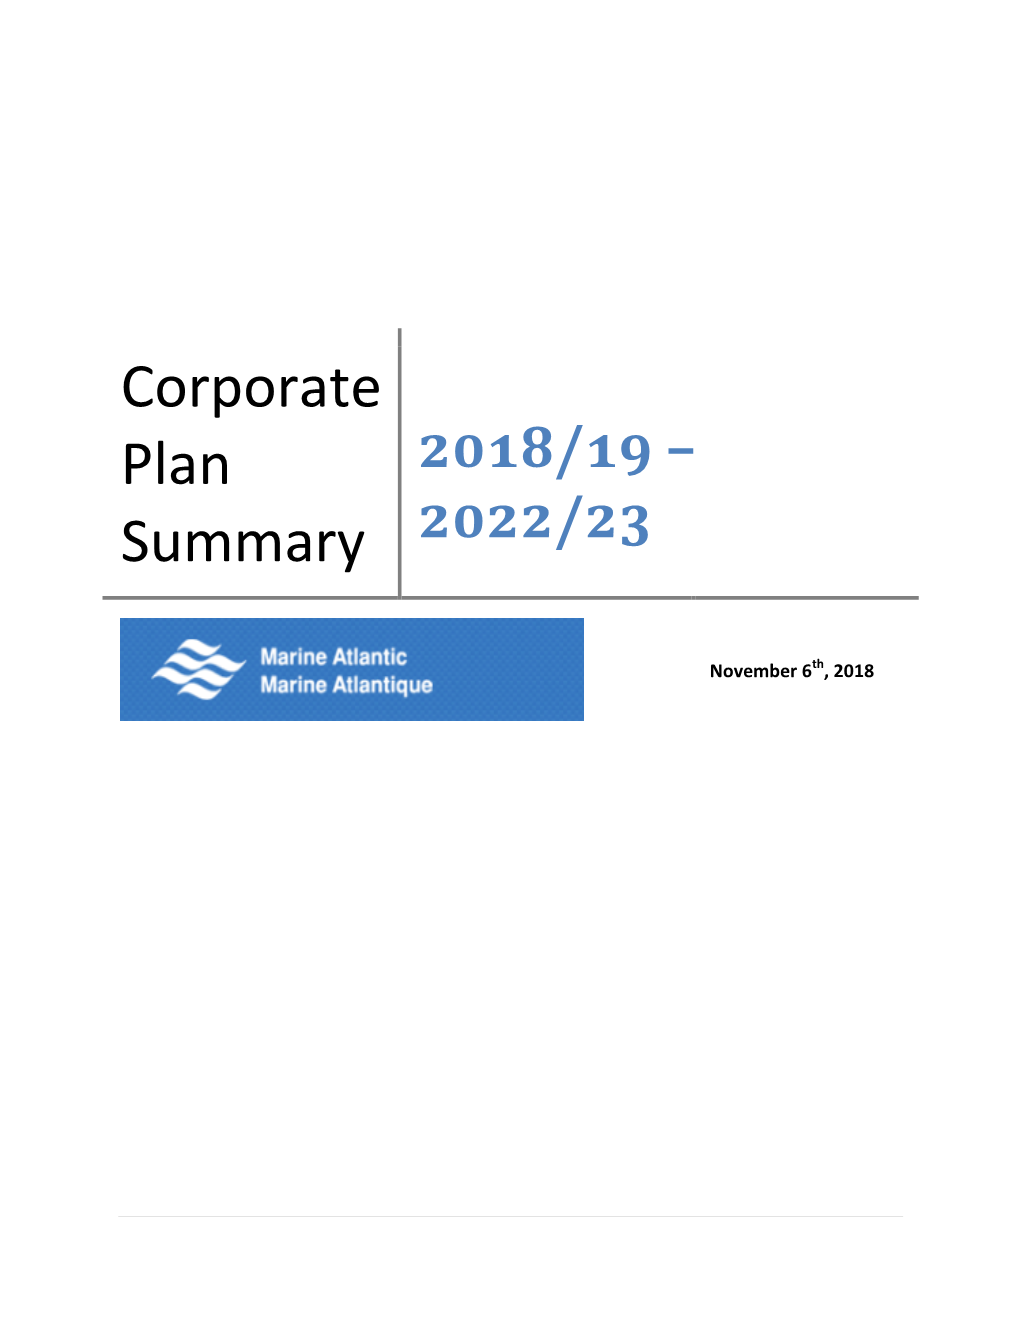 Corporate Plan Summary 2018/19